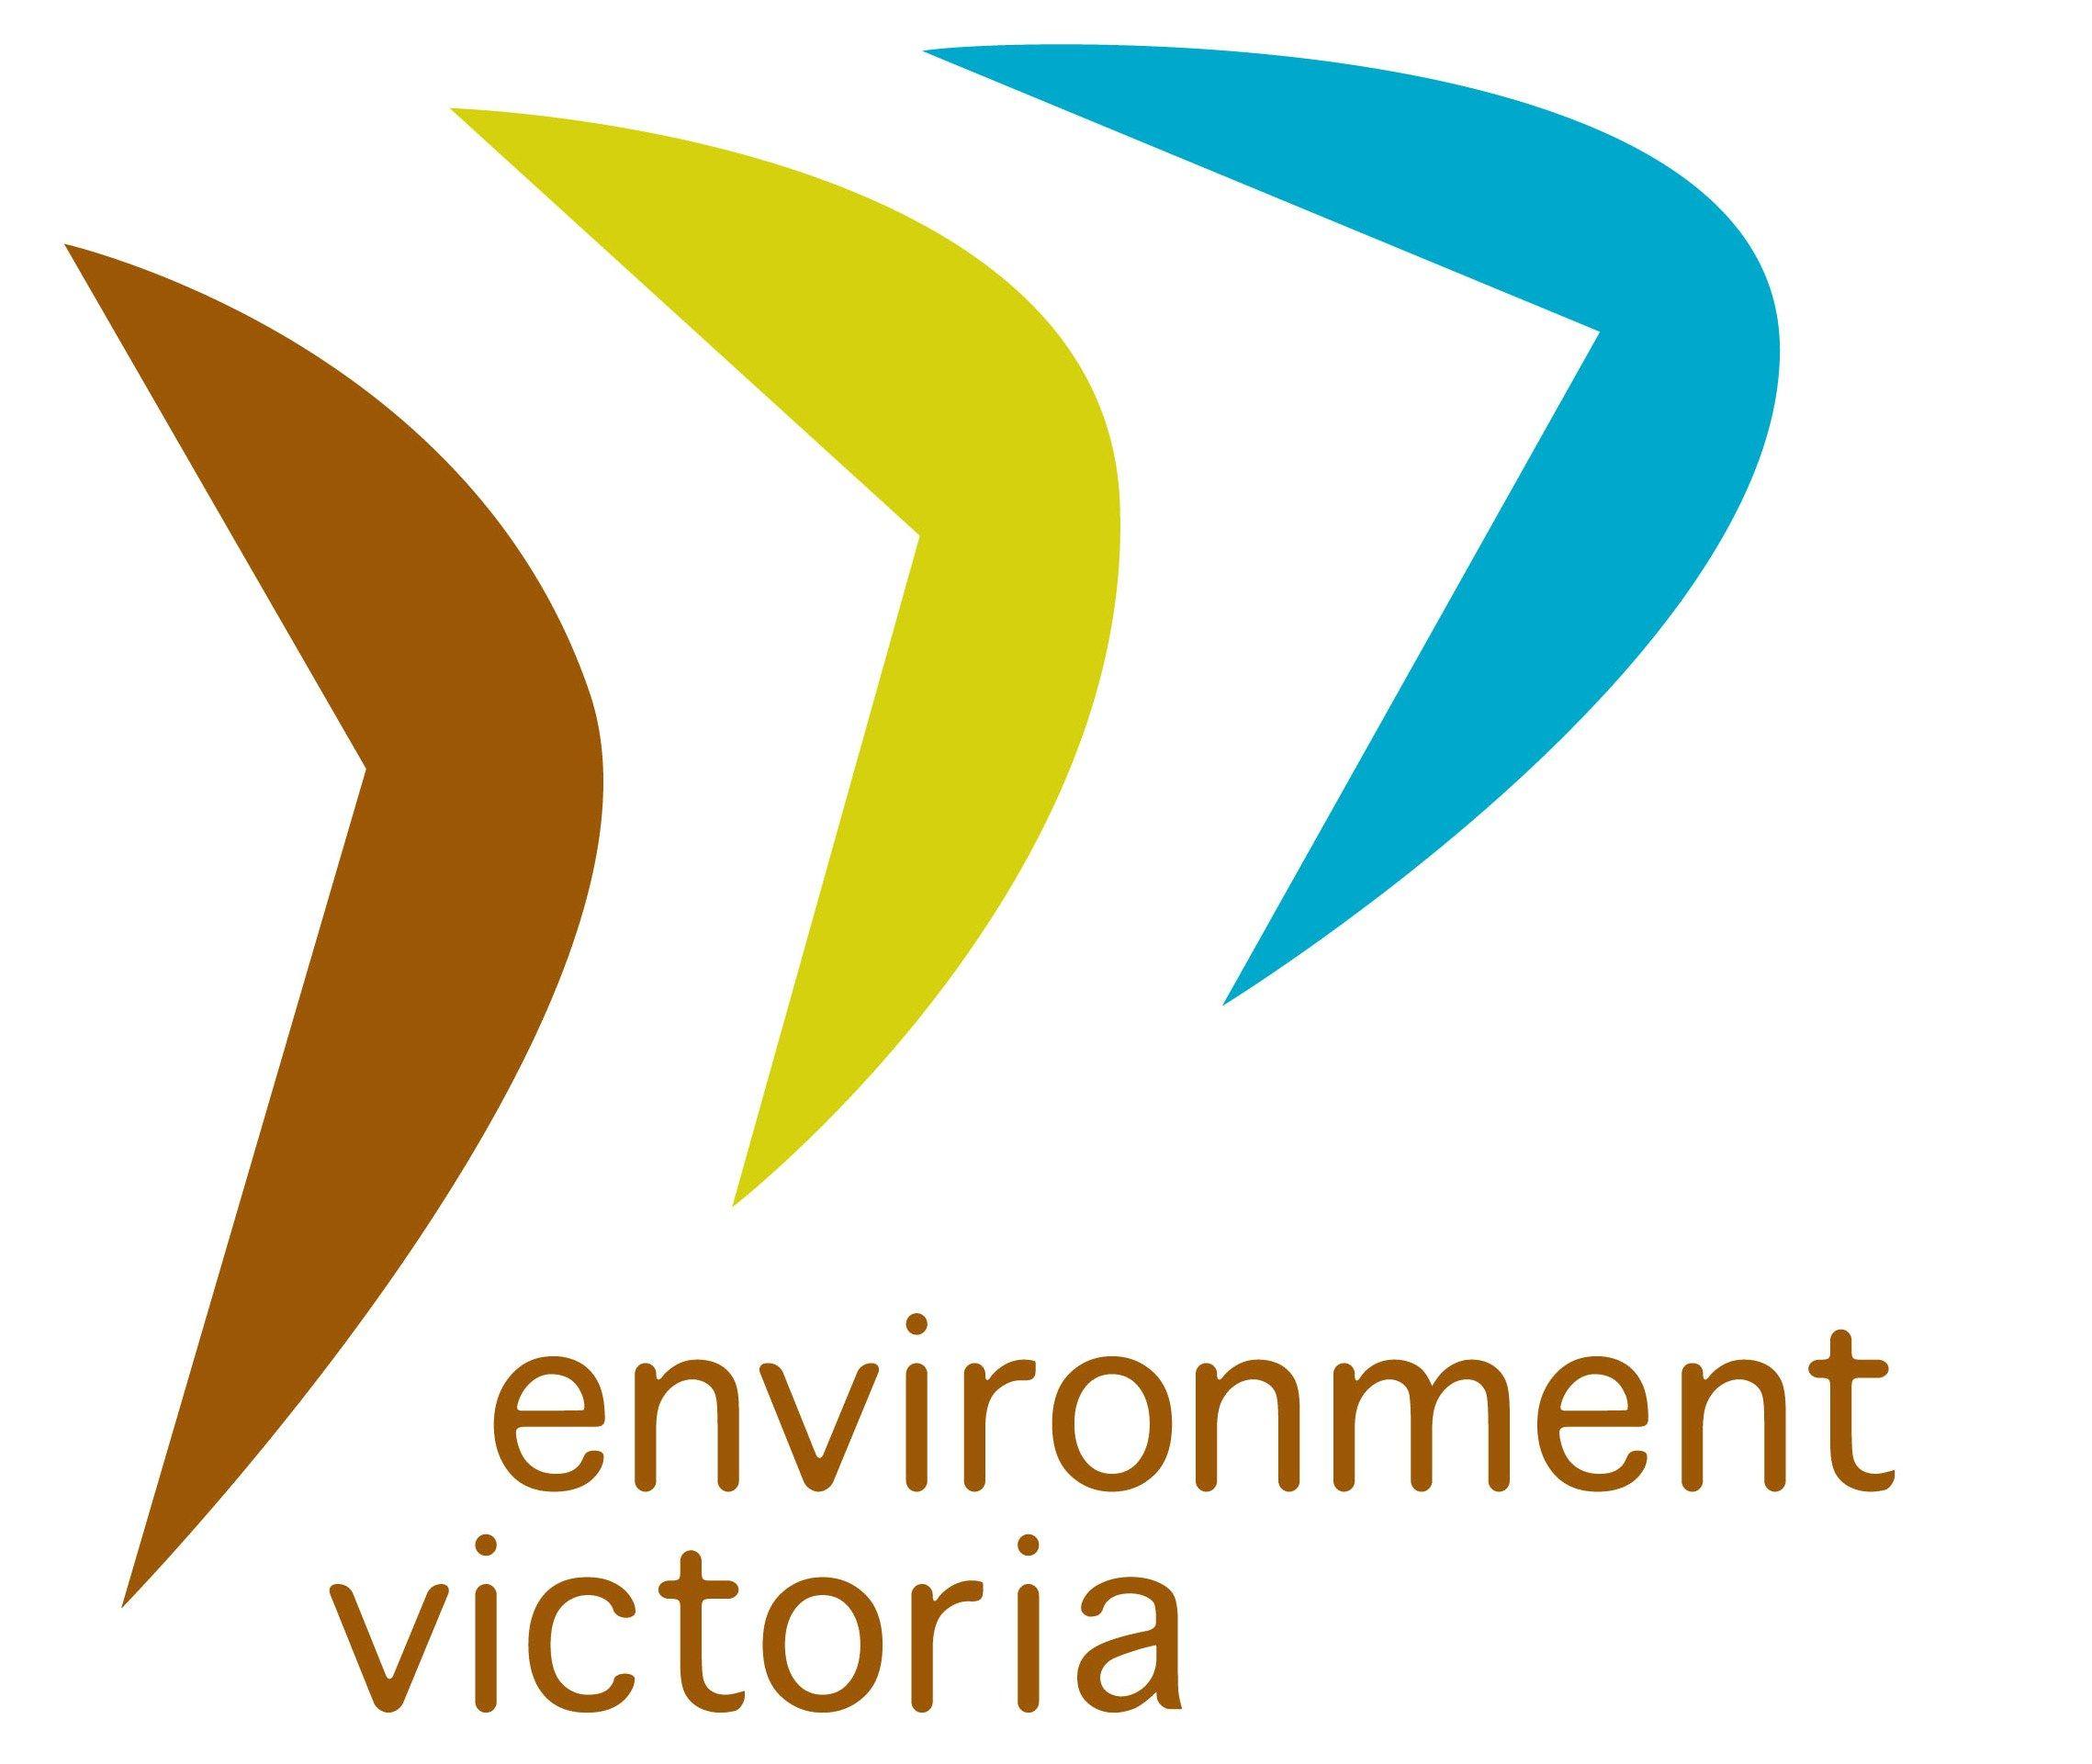 Victoria Logo - Environment Victoria